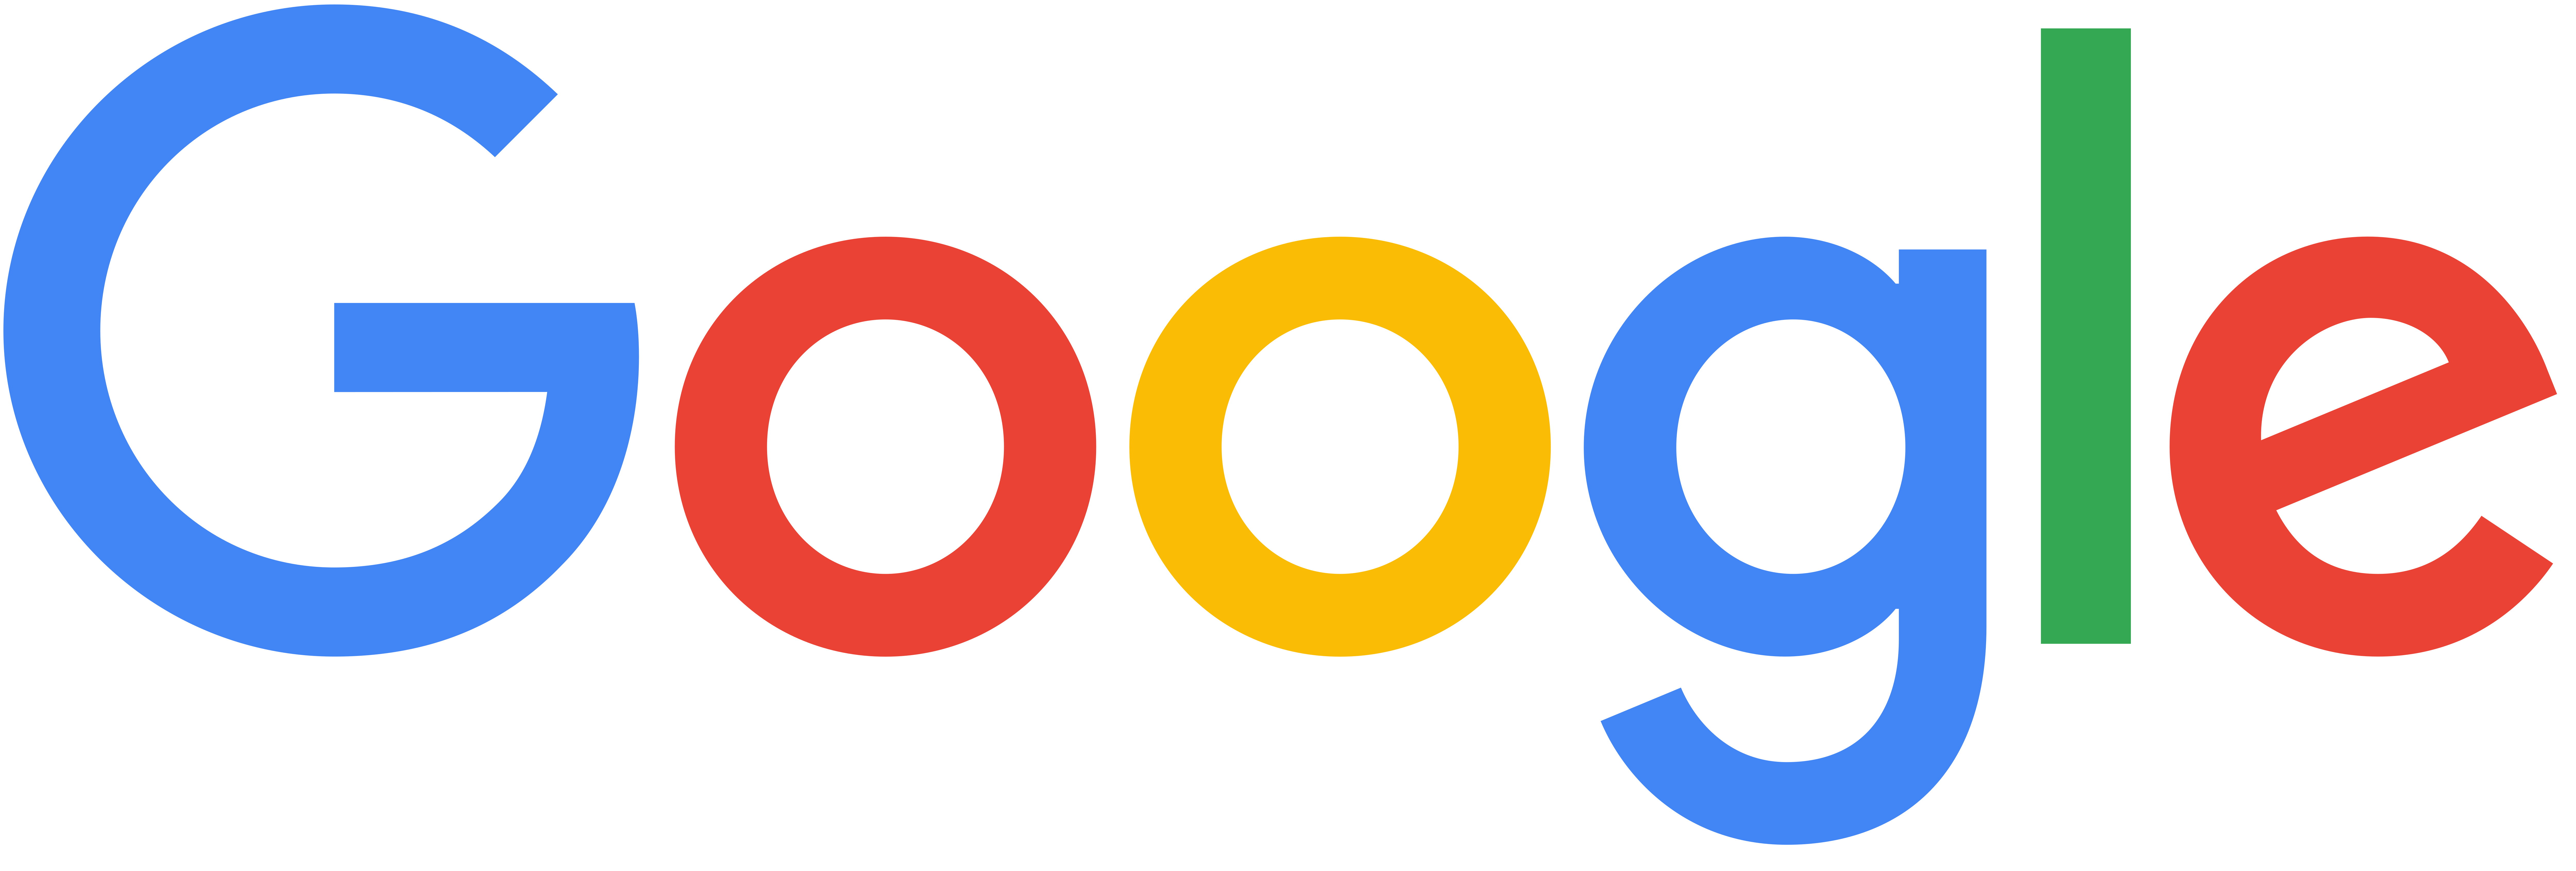 Google Logo Png Image Purepng Transparent Cc0